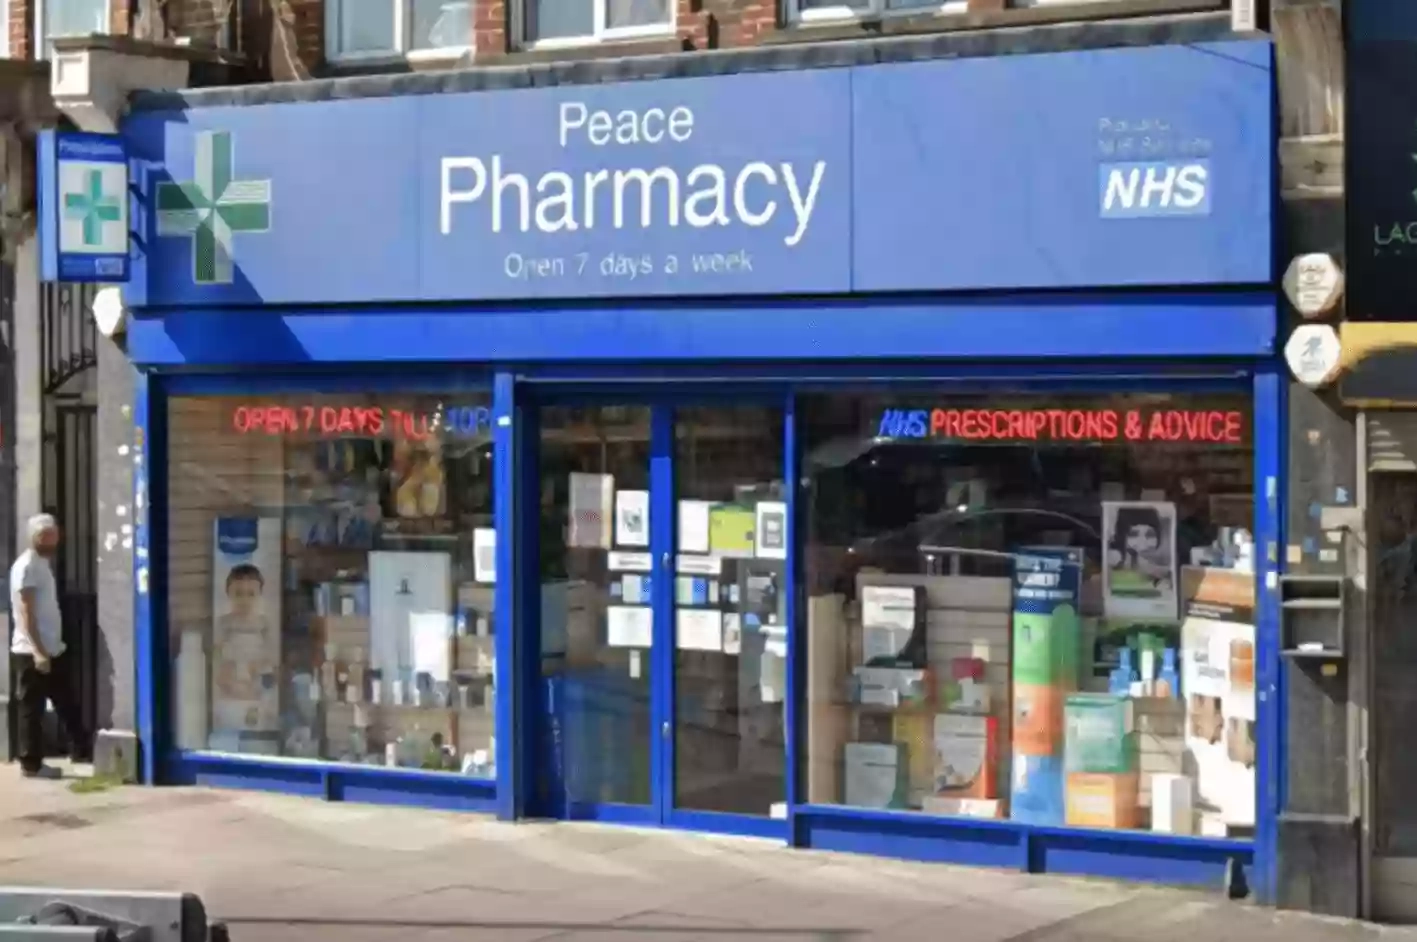 Peace Pharmacy